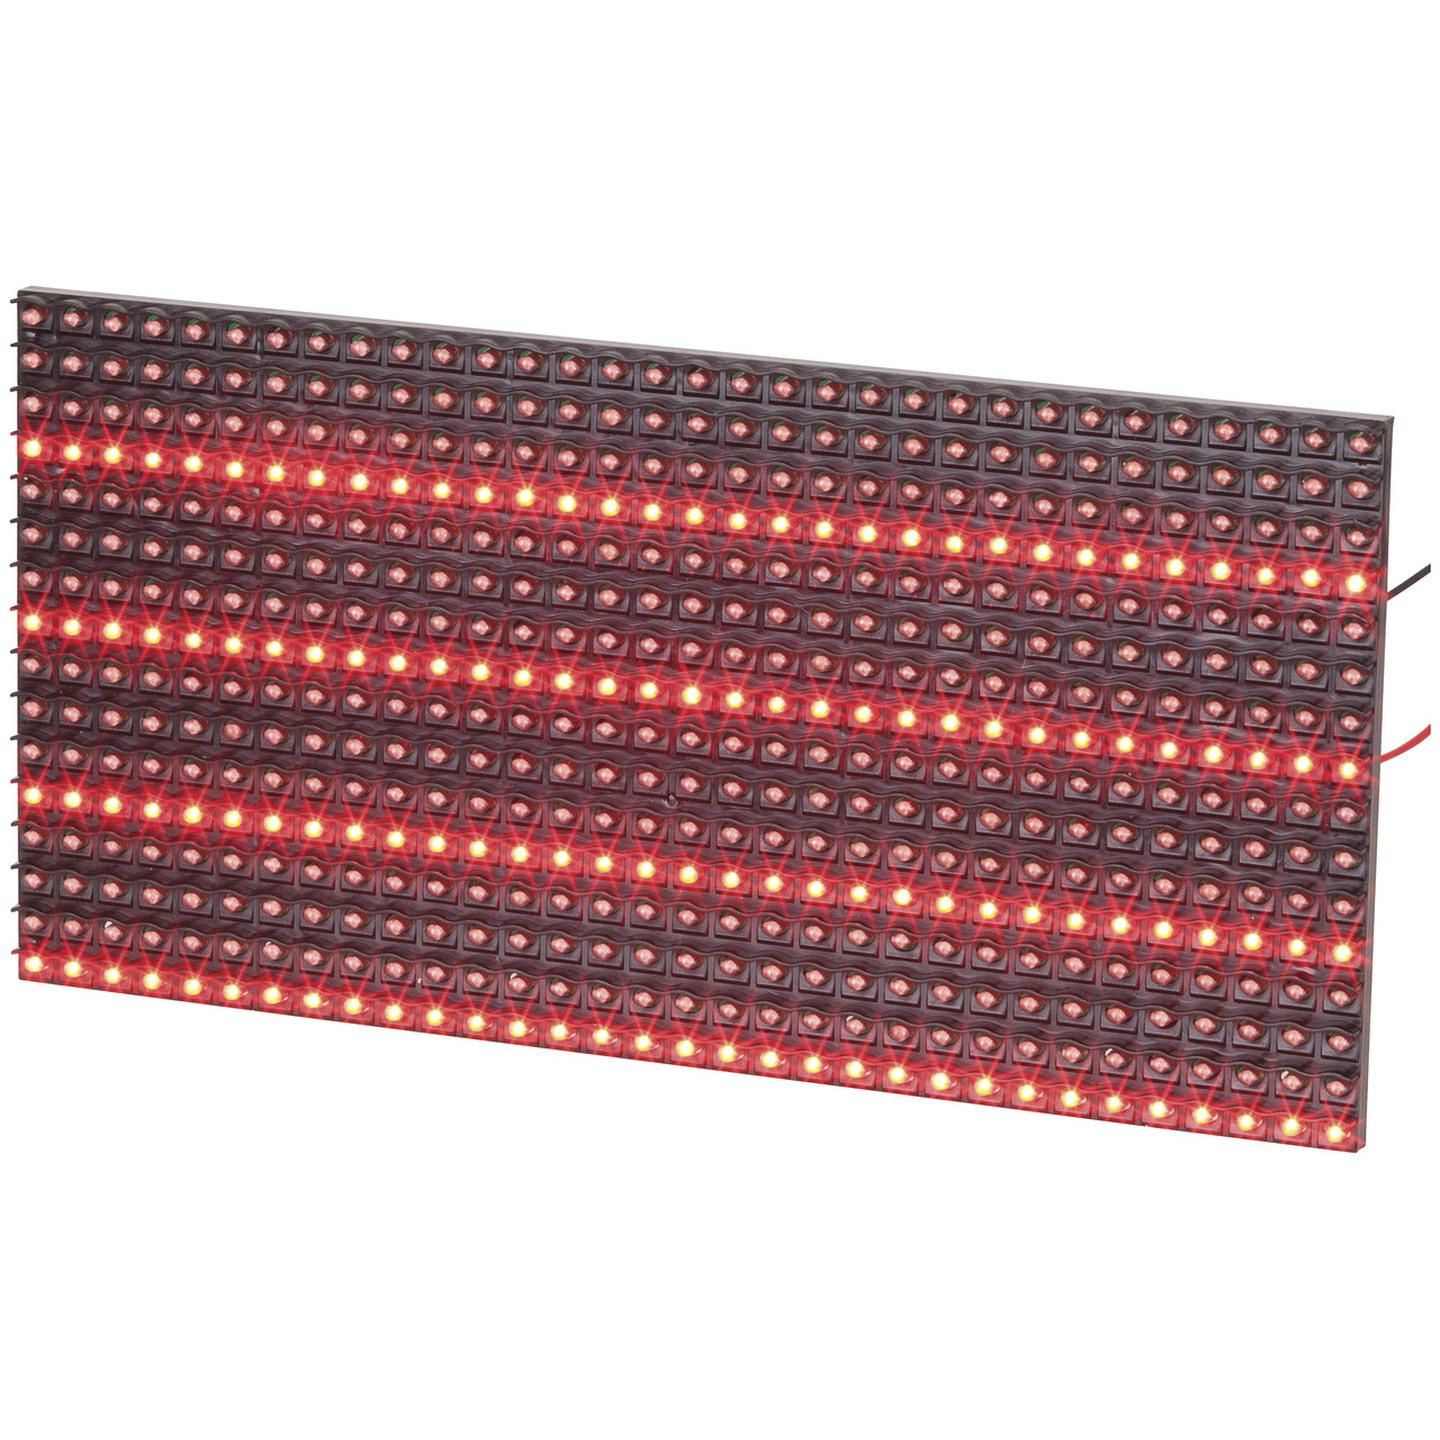 Red LED Dot Matrix Display for Arduino